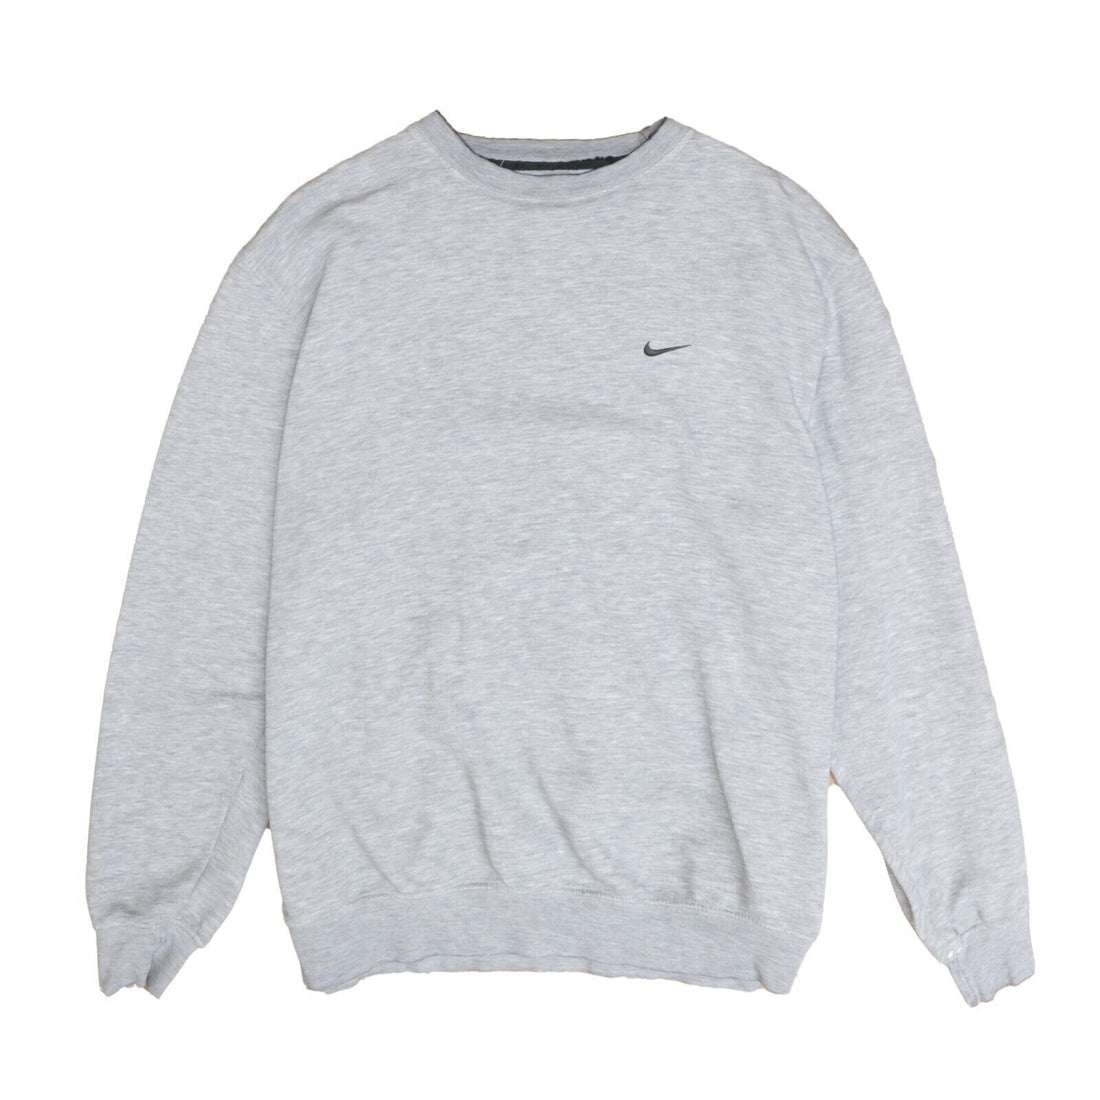 Vintage Nike Sweatshirt Crewneck Size Large Gray Embroidered Swoosh